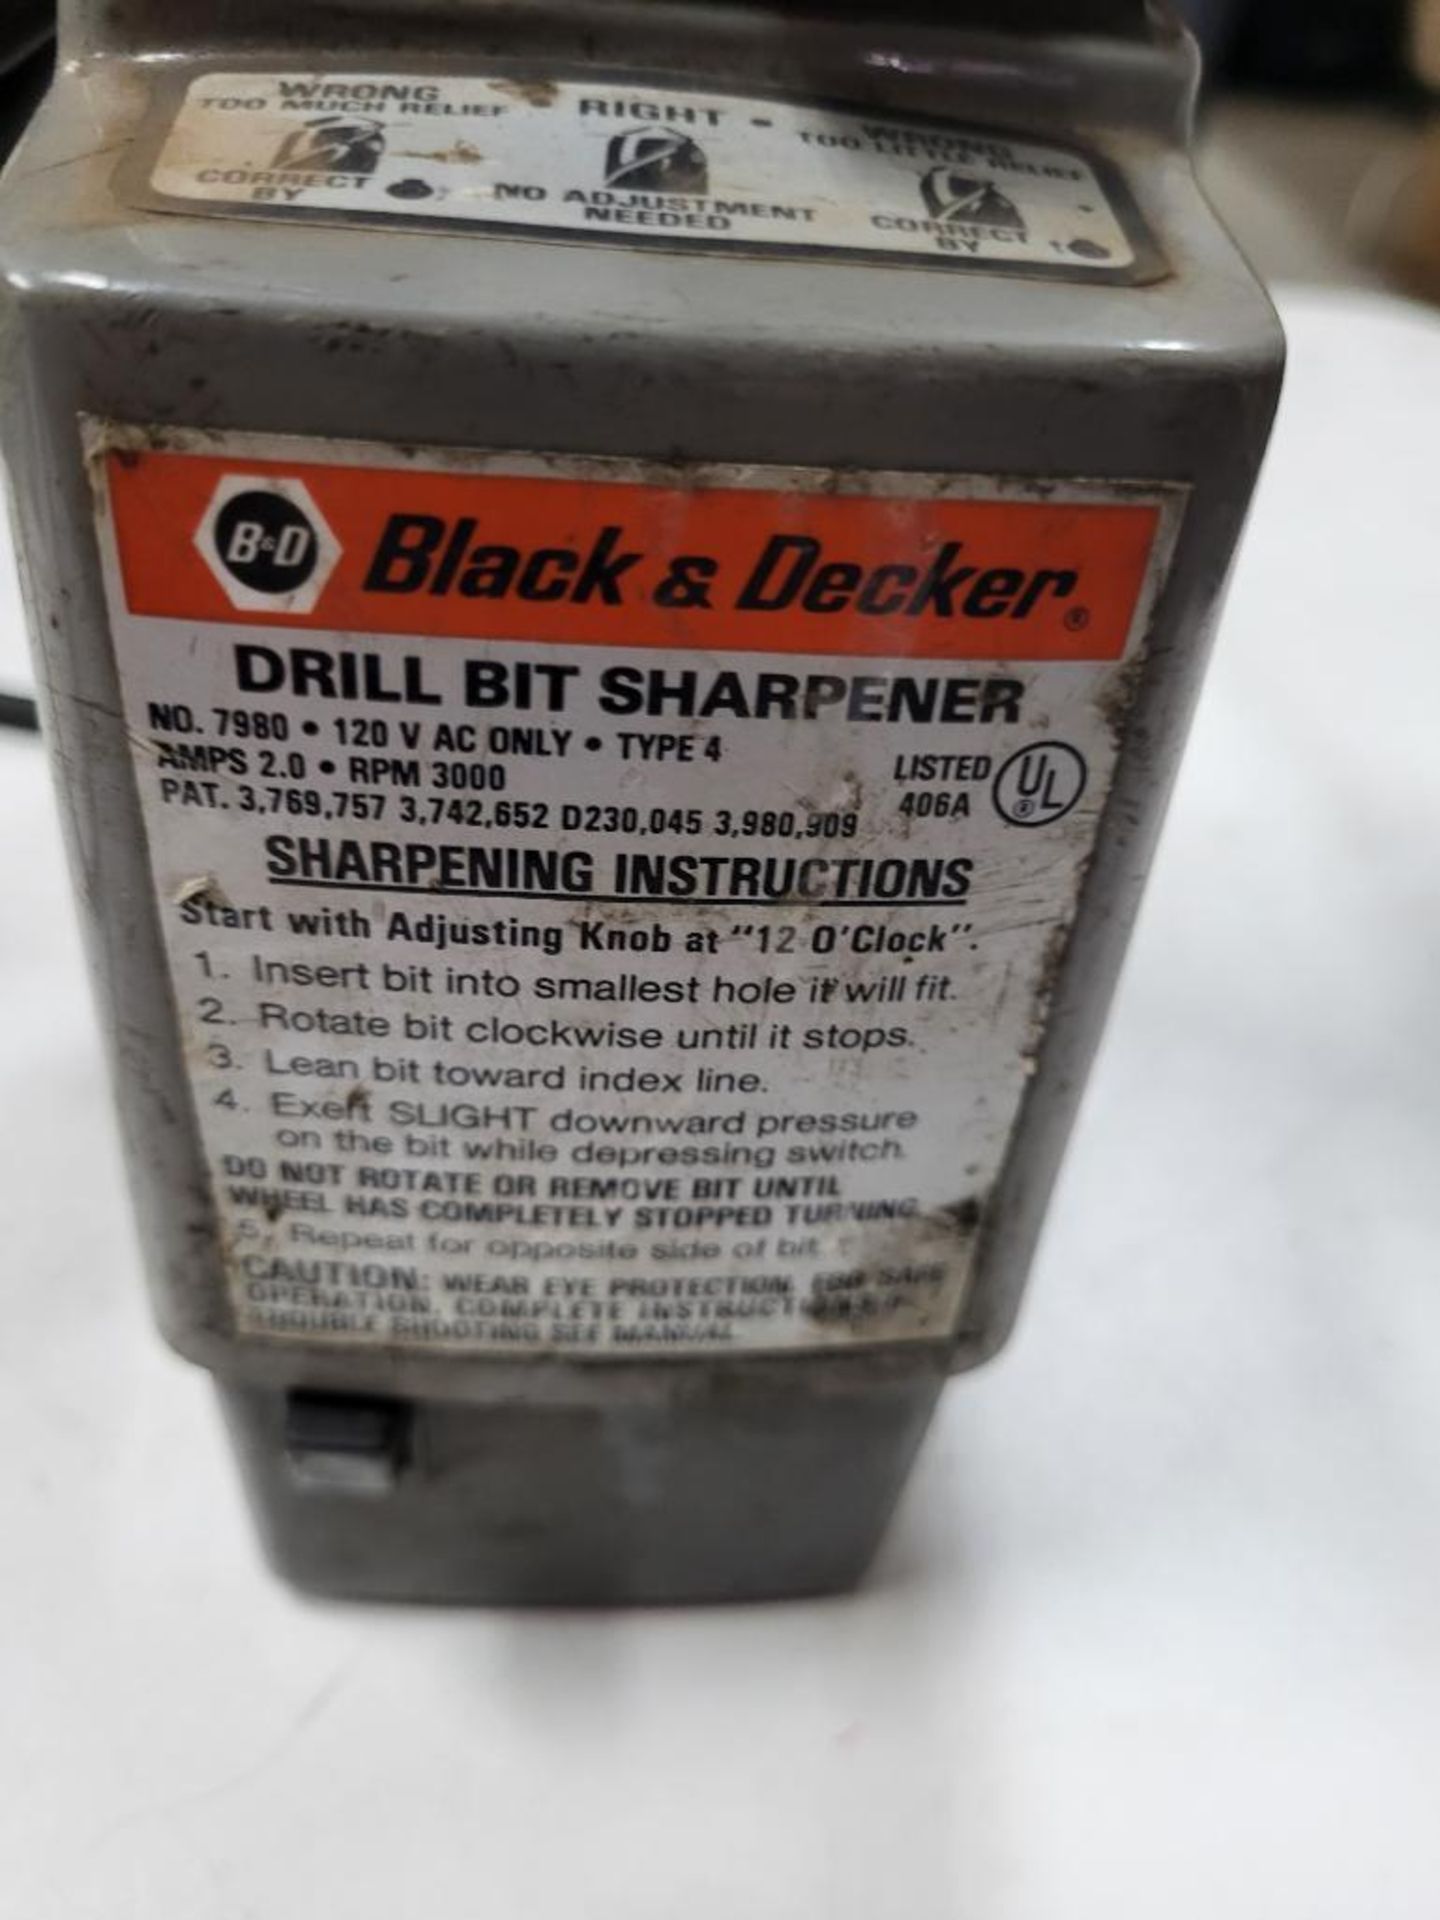 Black & Decker Drill Bit Sharpener M/N 7980 - Image 2 of 2